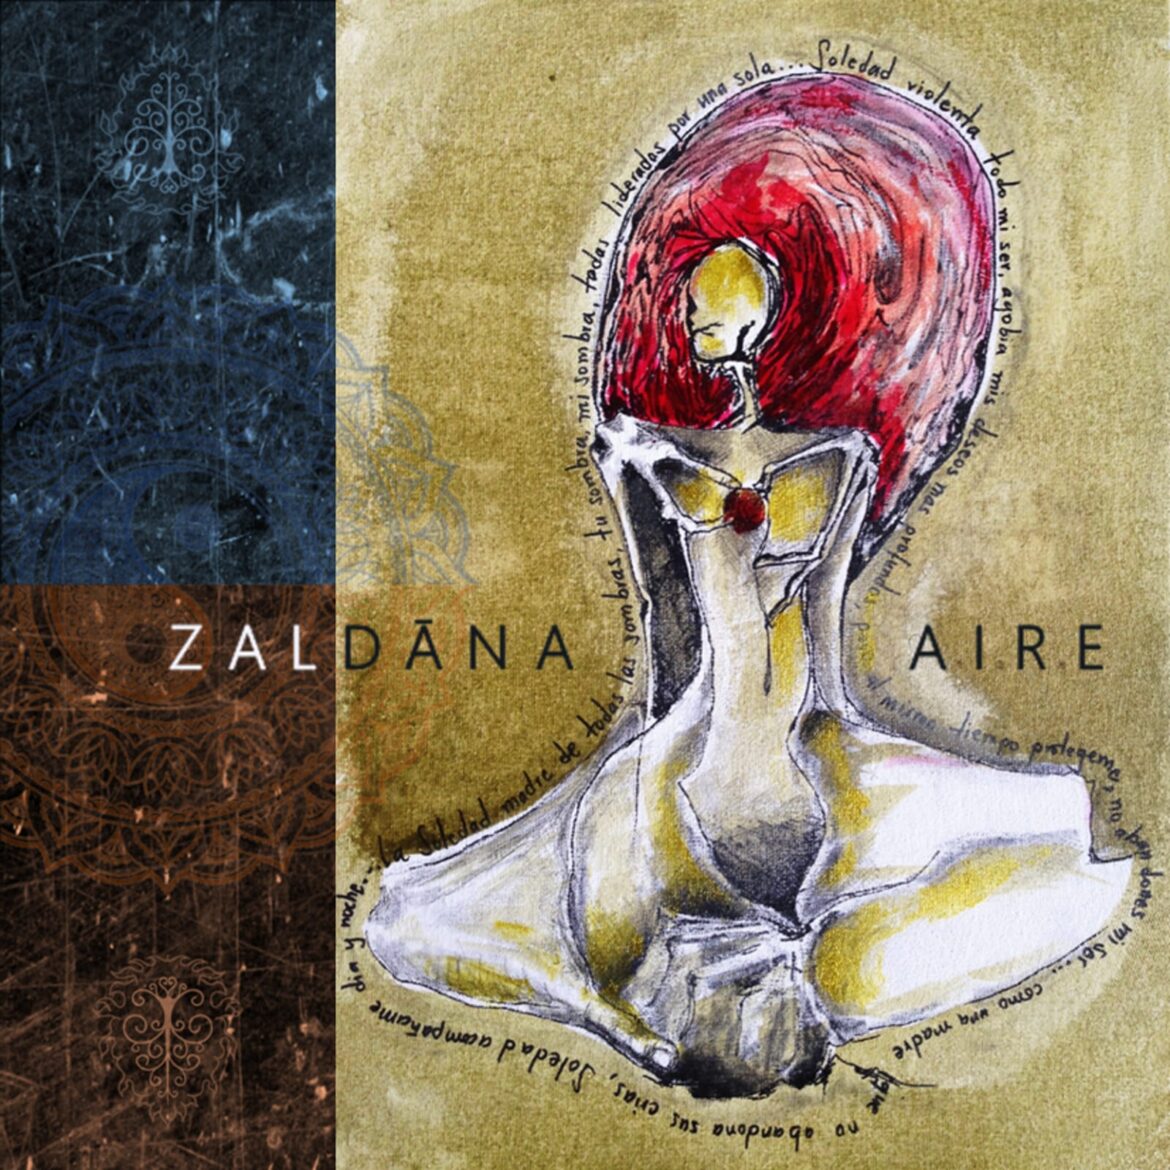 ZALDĀNA presenta A.I.R.E, canción que reflexiona sobre la importancia de la conexión interior